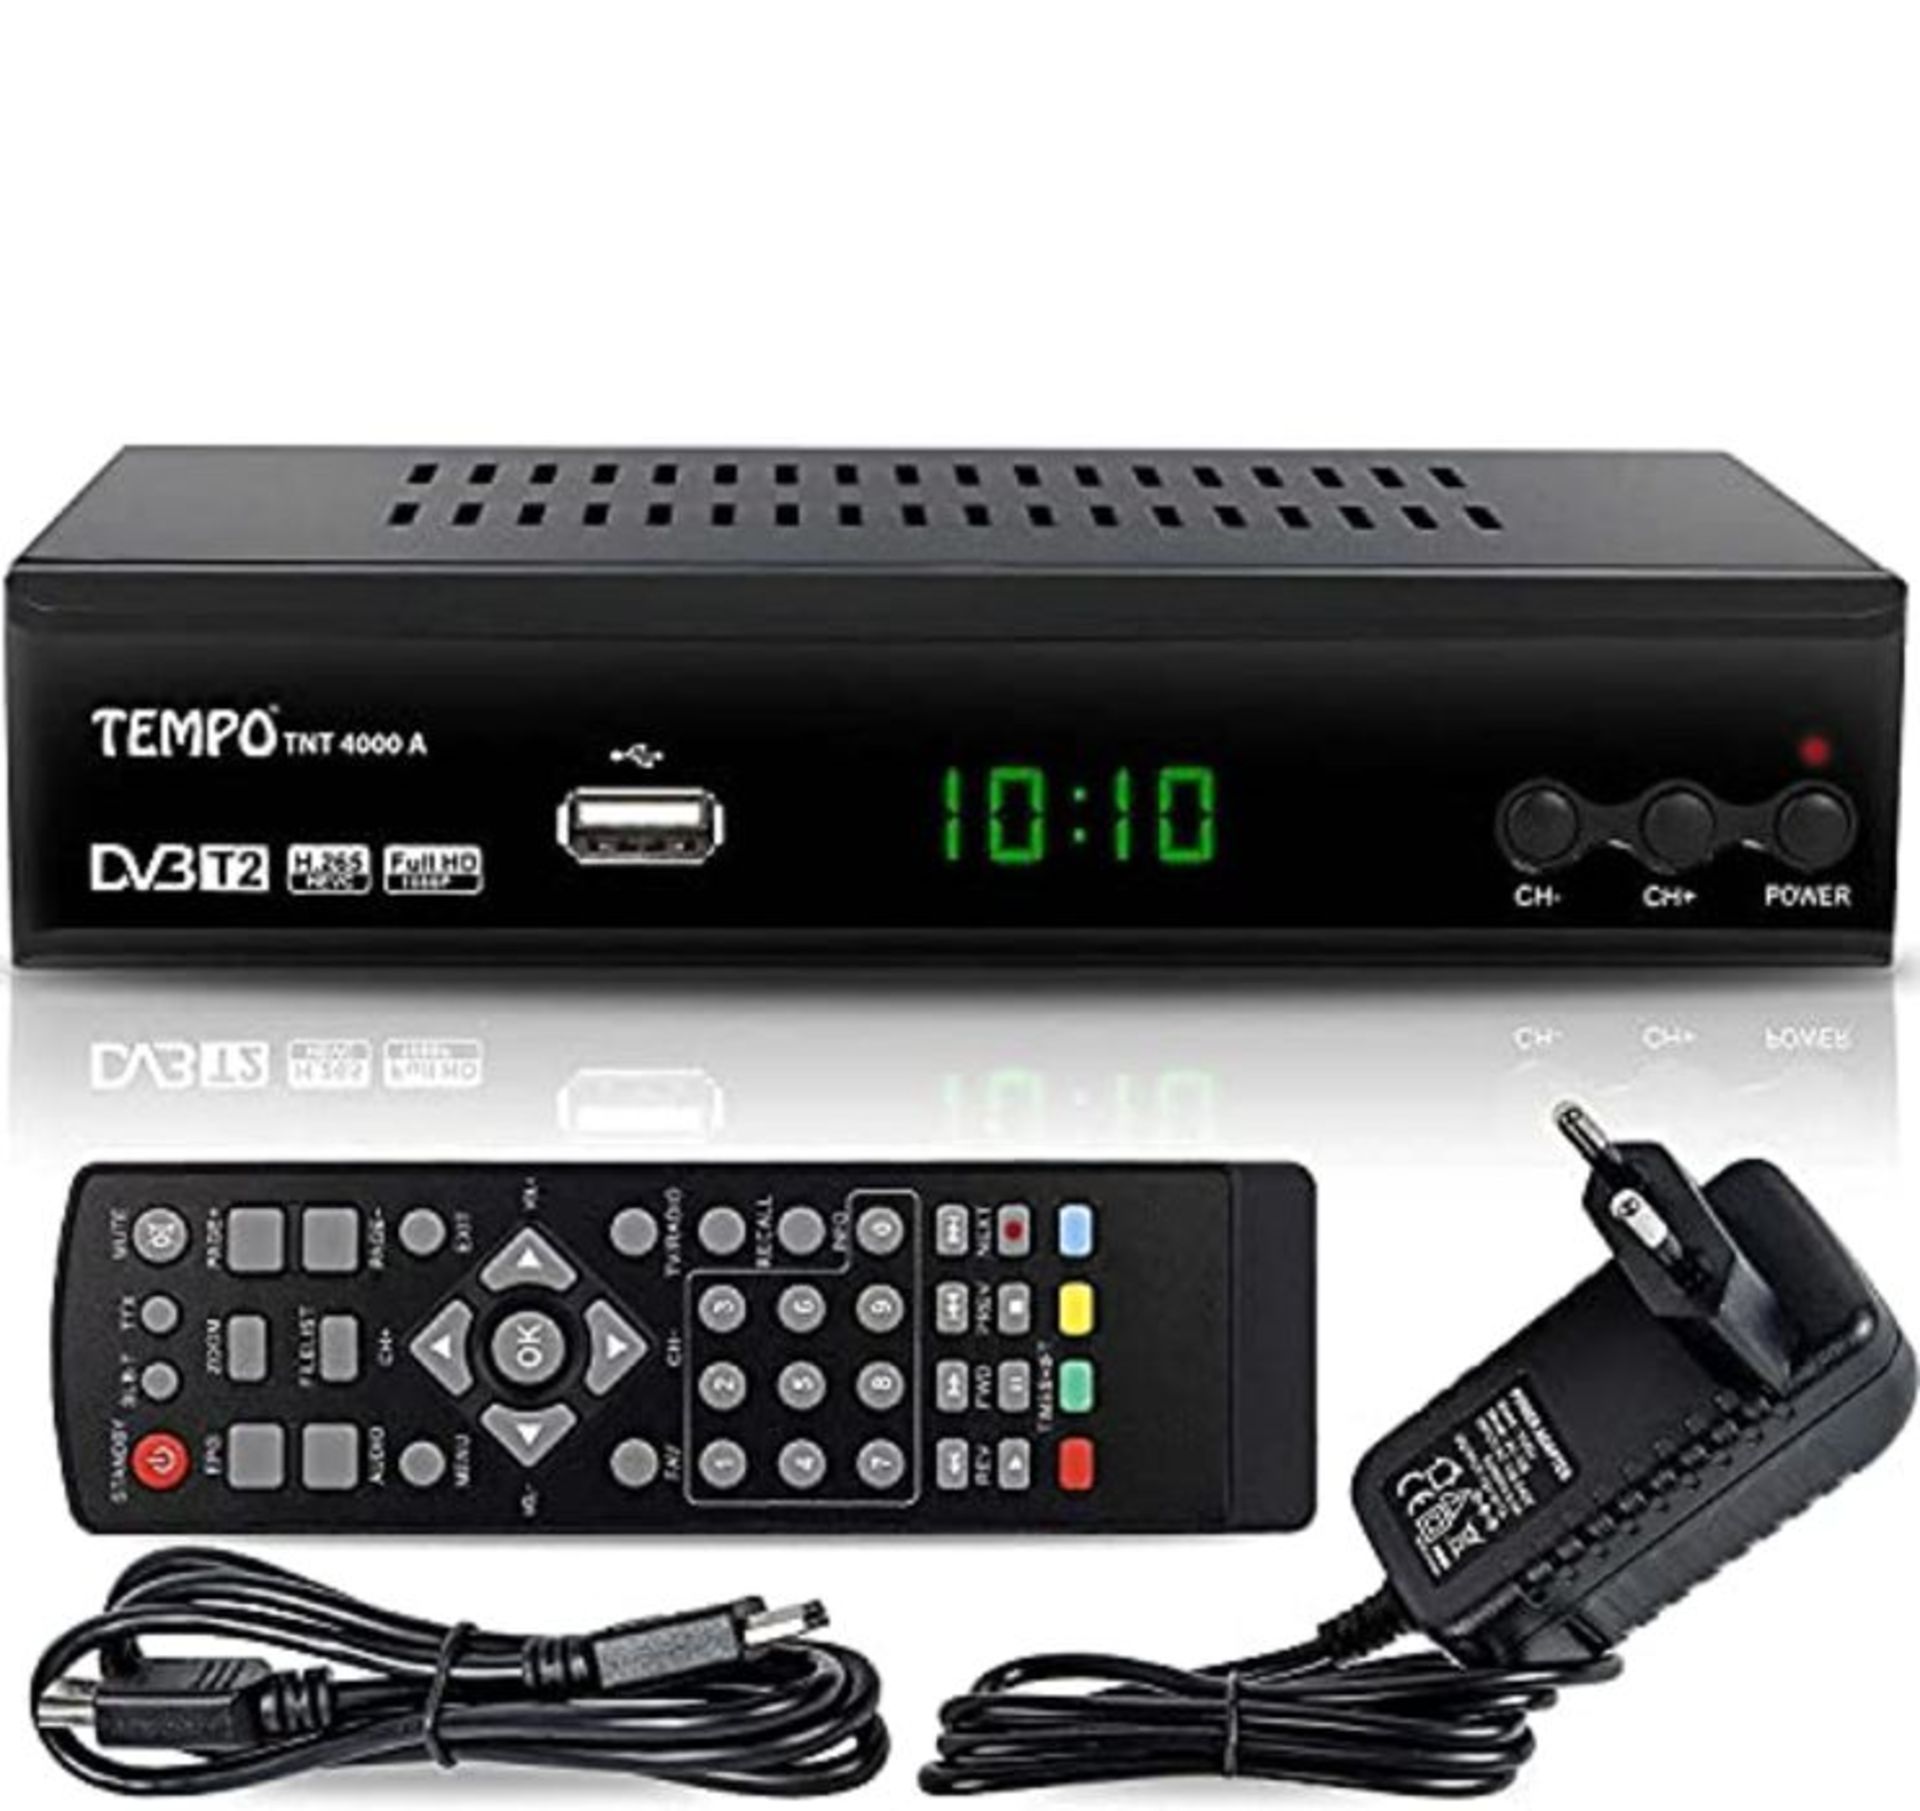 Tempo tmp4000 - Decoder Digitale Terrestre DVB T2 / HD / HDMI / Ricevitore TV / PVR /